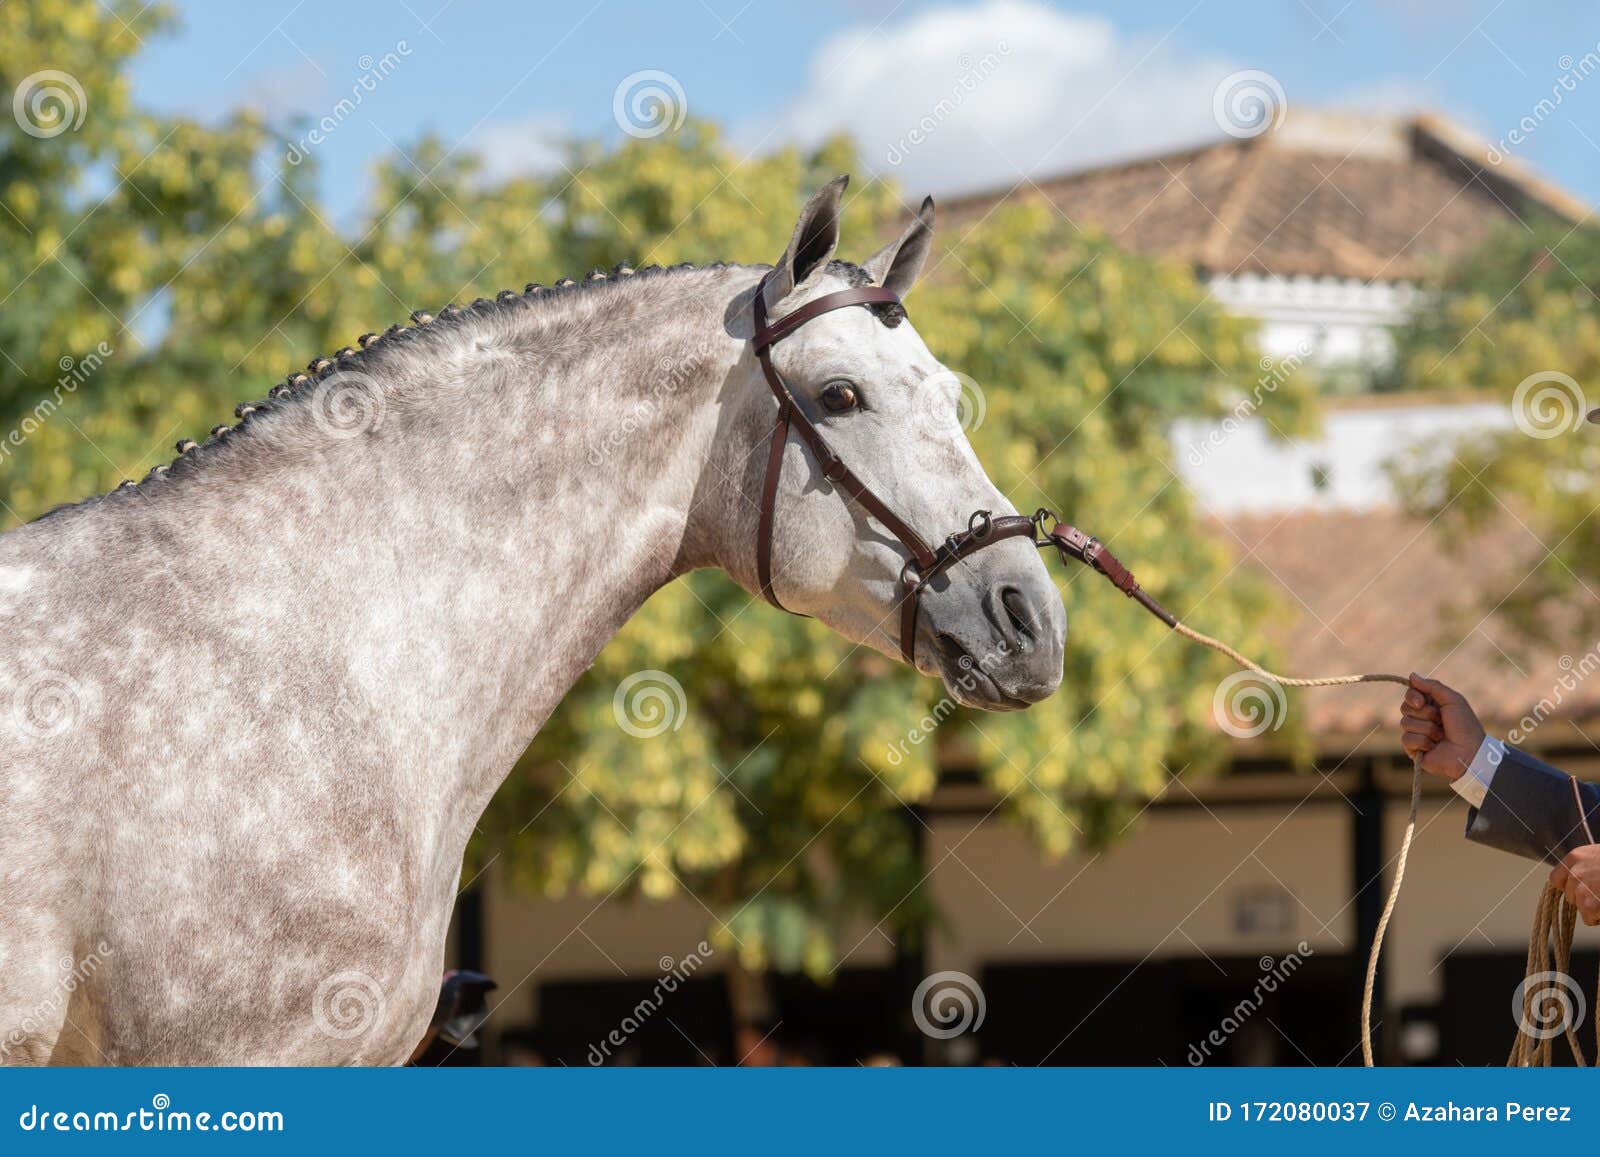 beautiful portrait of a hispano arabian horse in spain